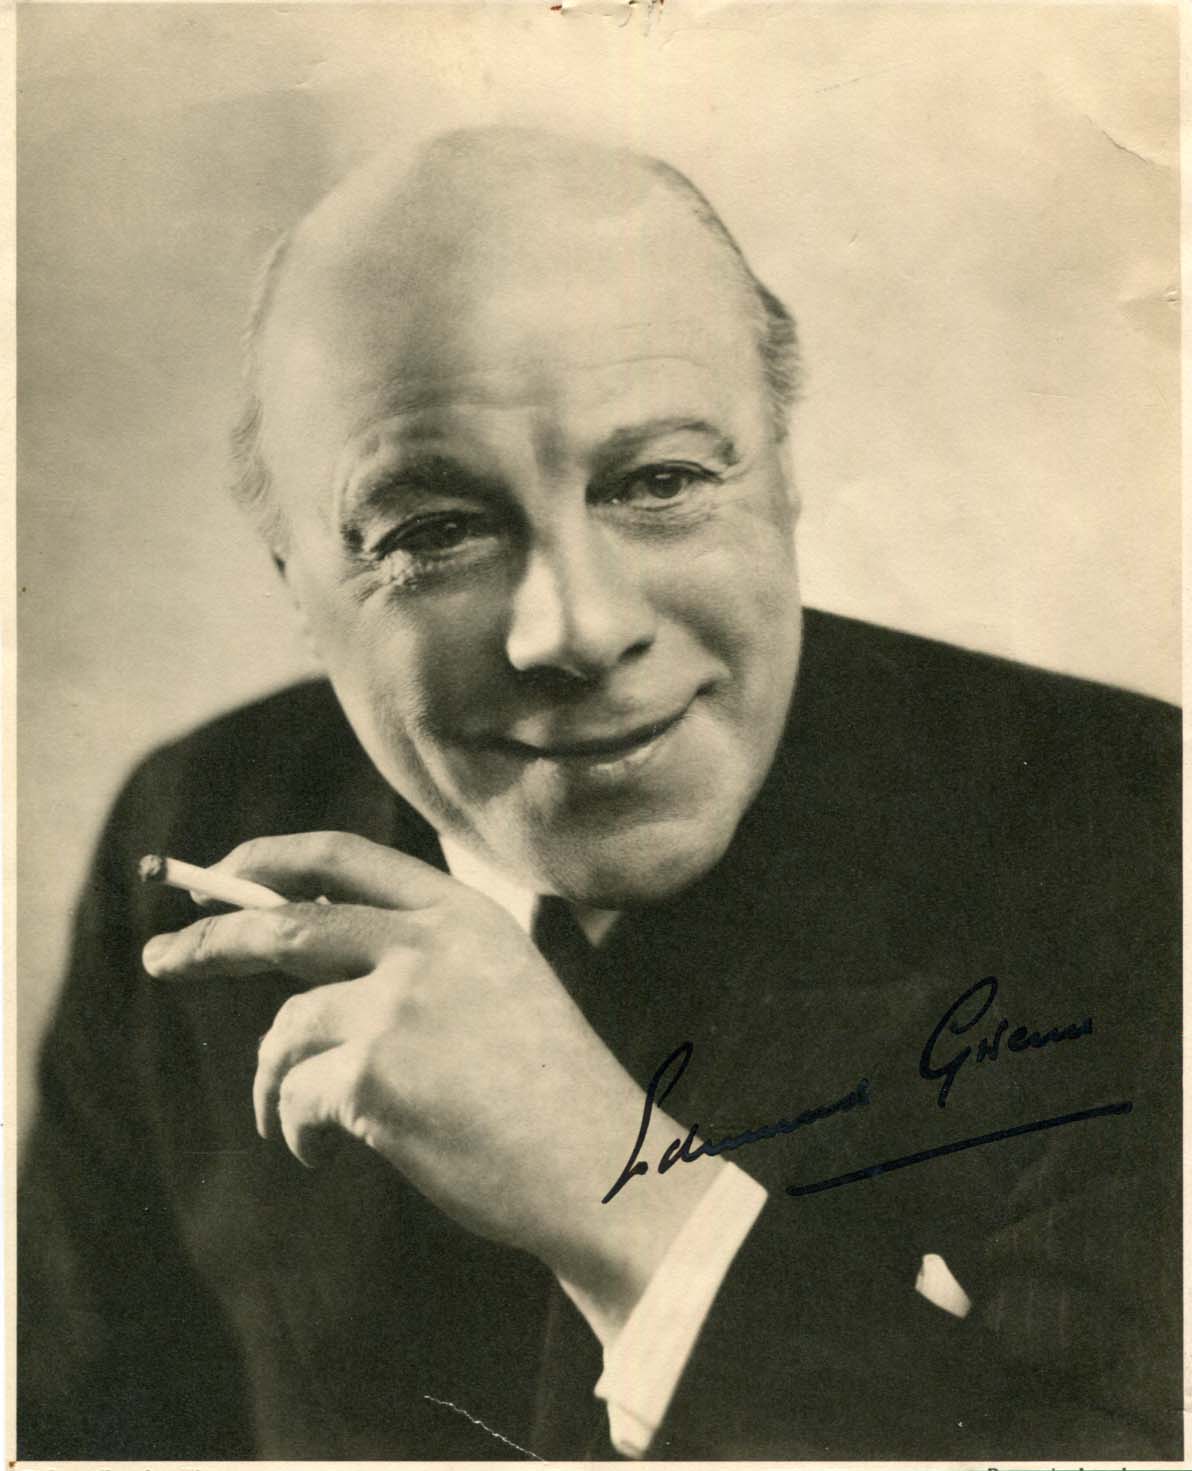 Edmund Gwenn Autograph Autogramm | ID 8058984398997